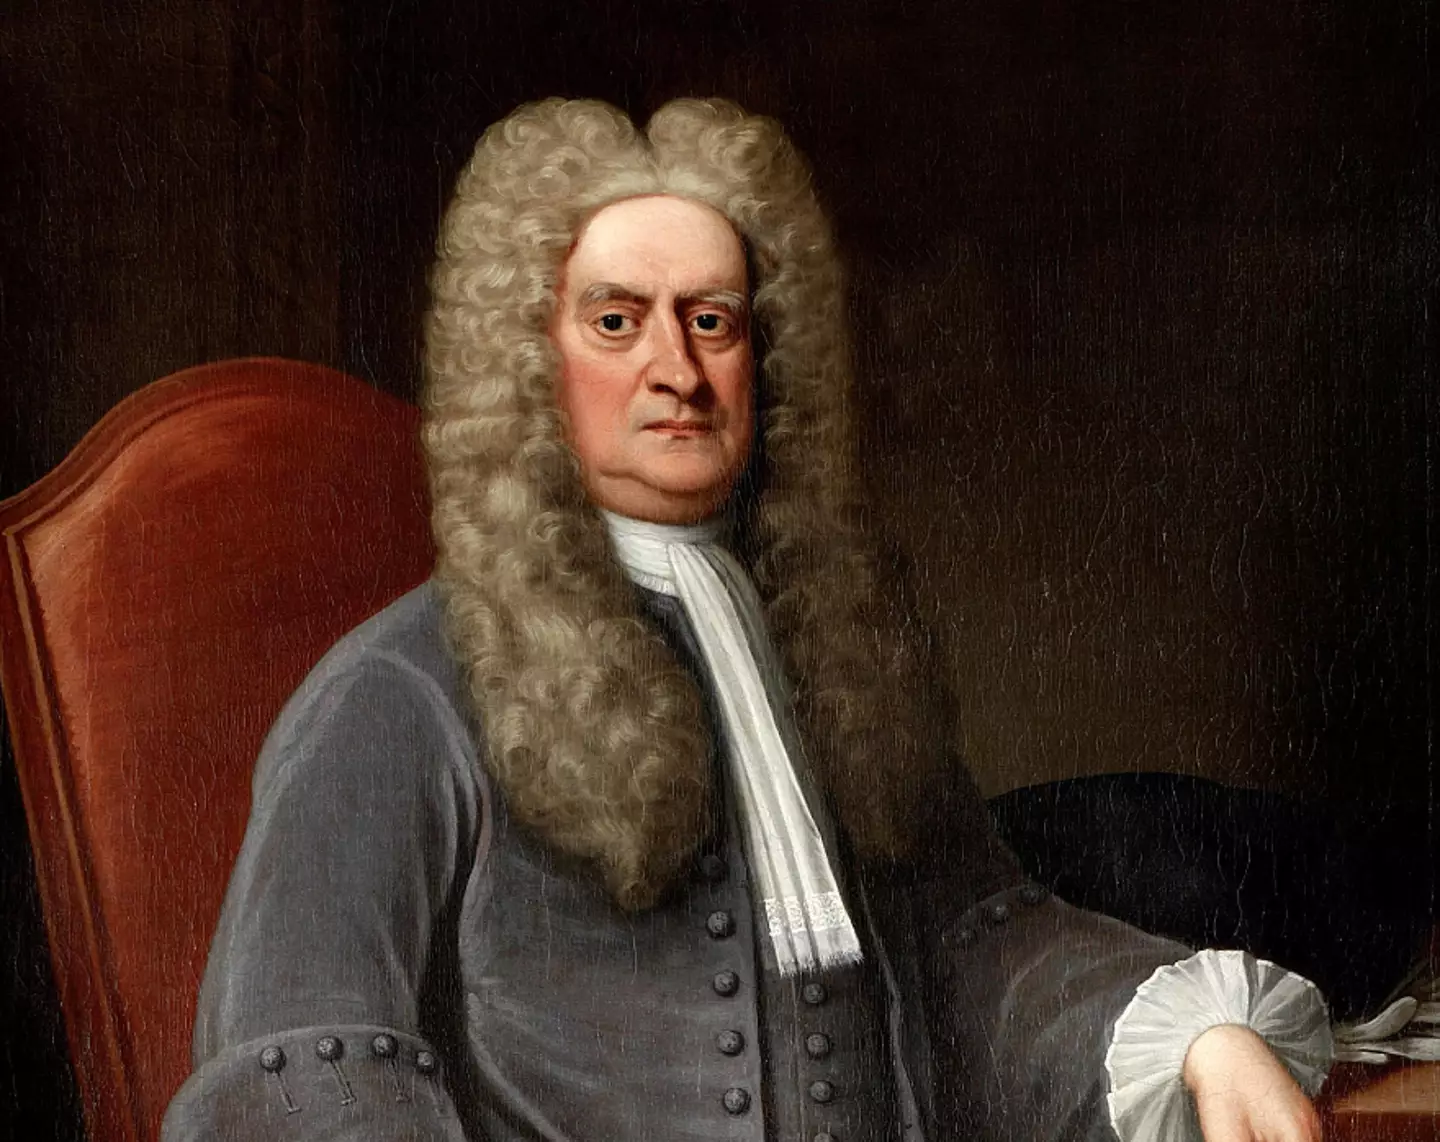 Newton wrote his prediction in the 1700s.